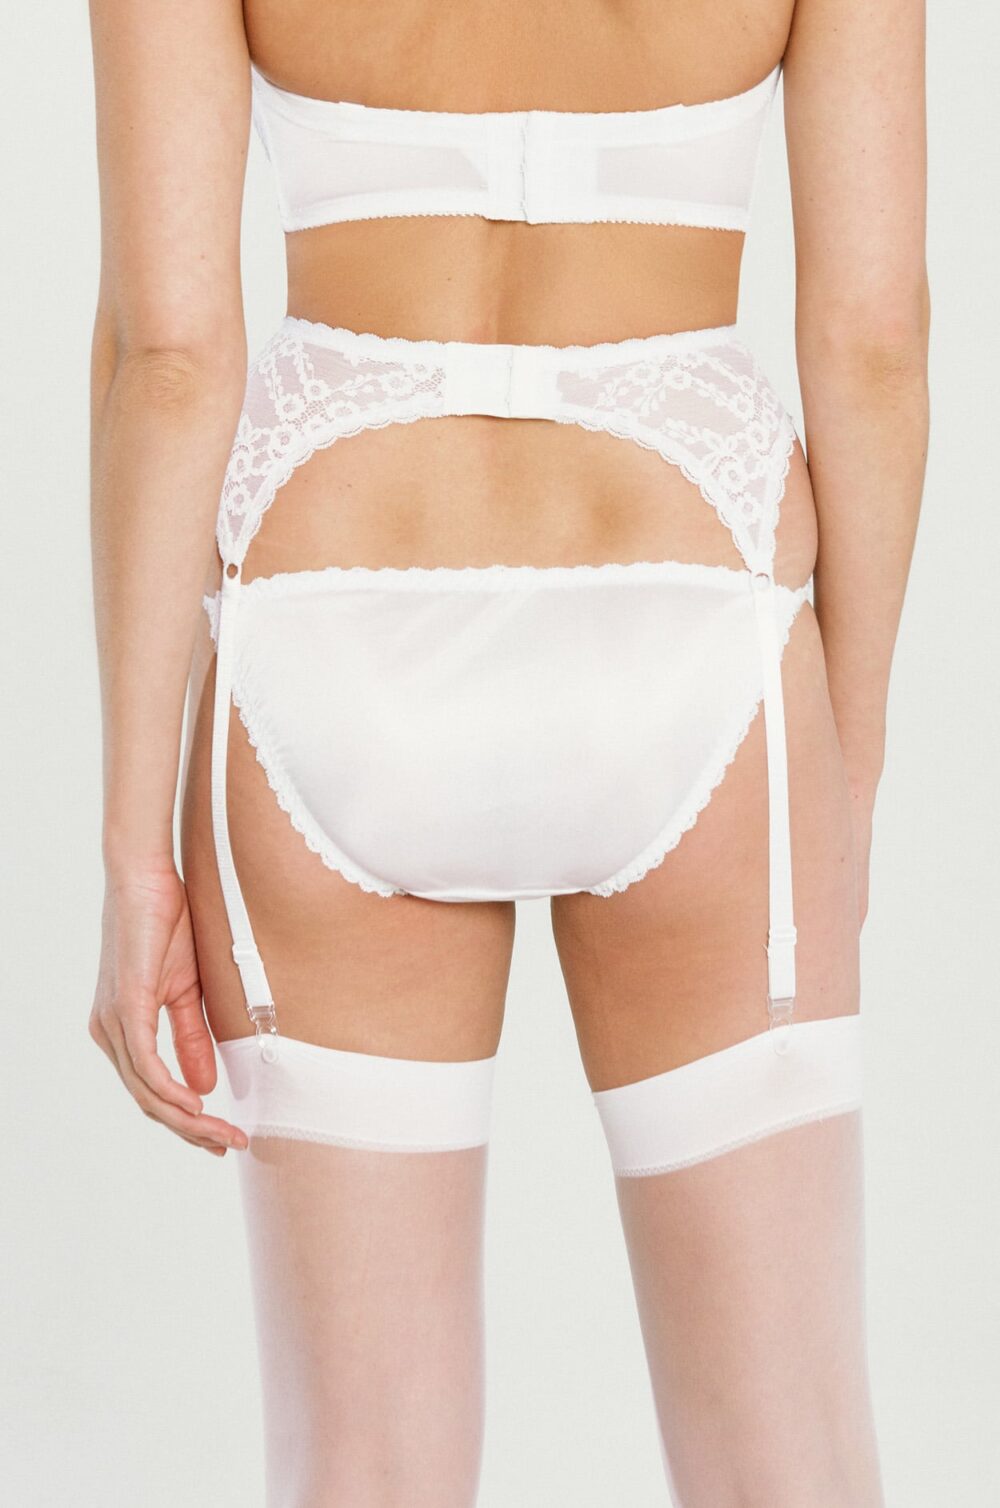 Lace Garter Belt - White, Back